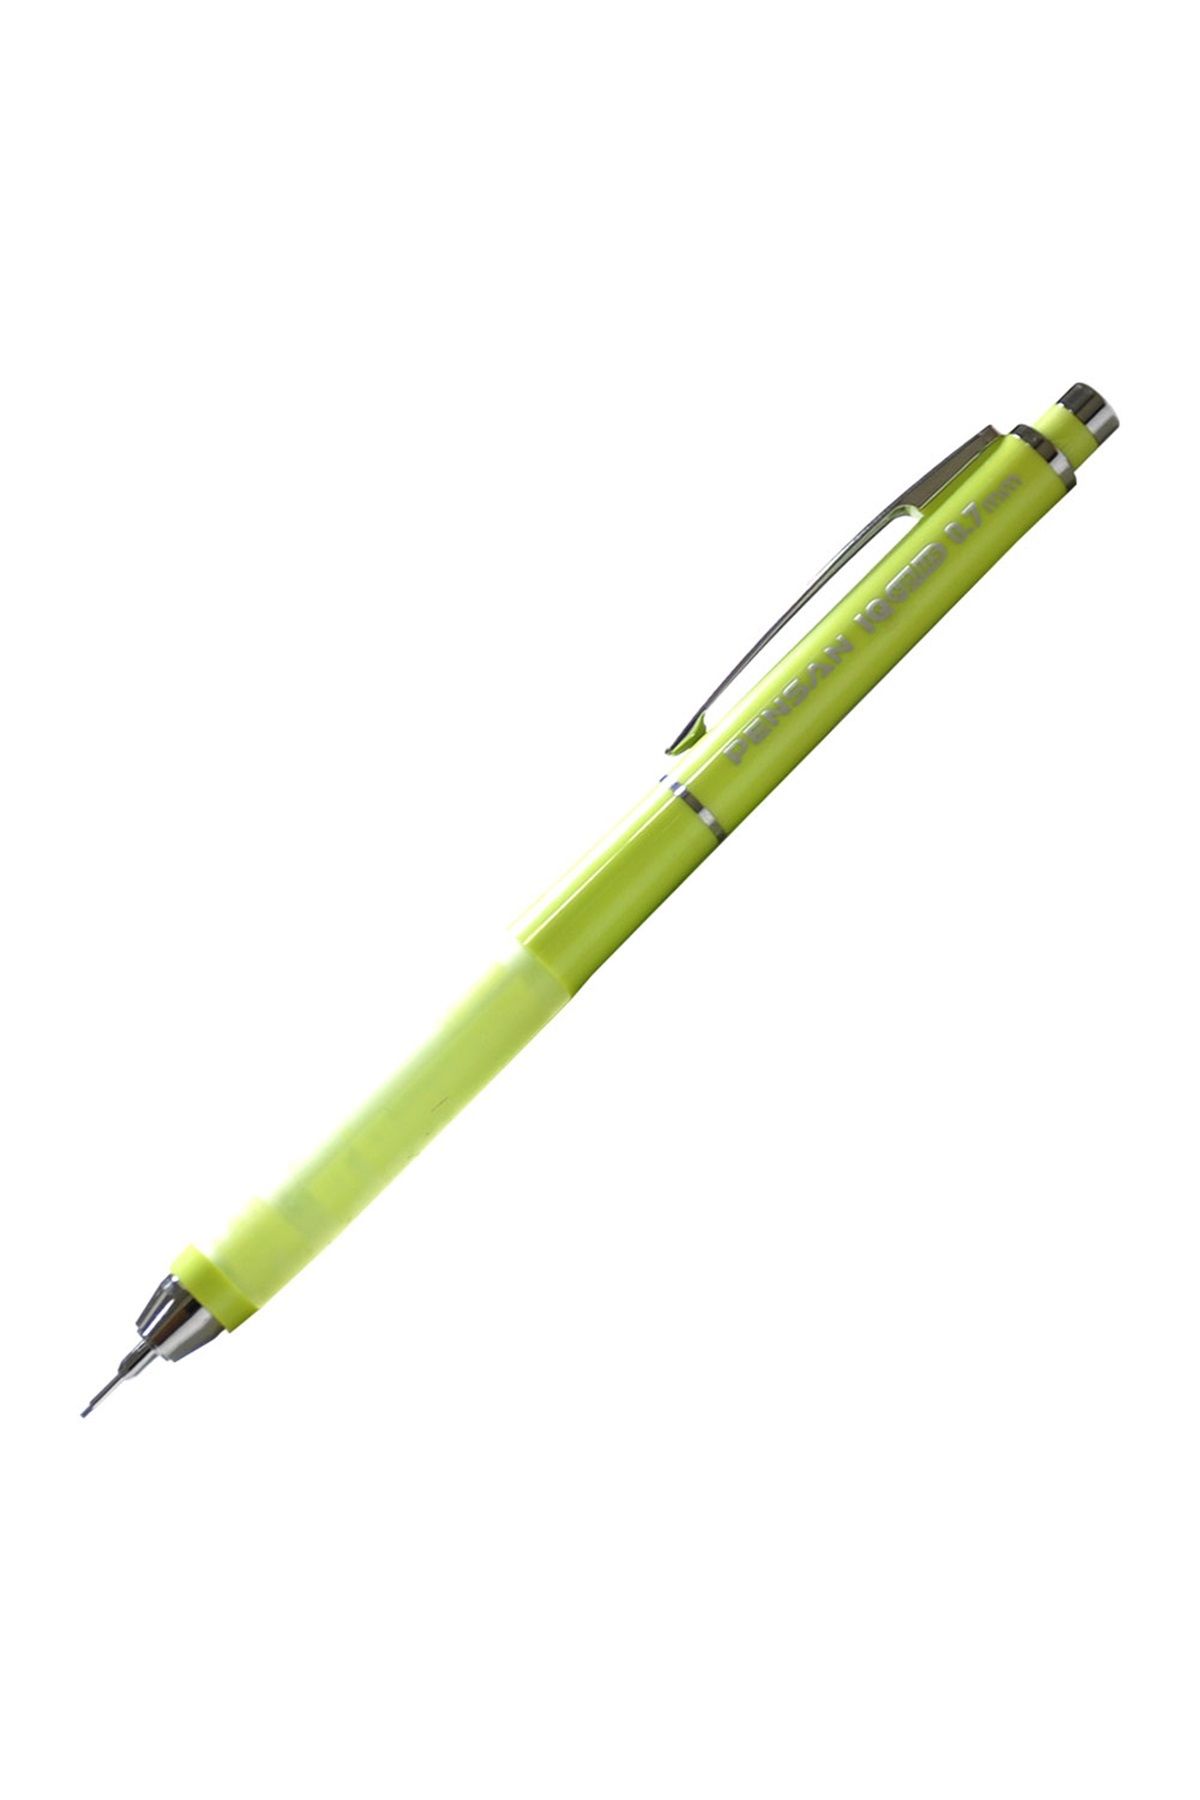 Pensan Iq Plus Versatil Kalem 0.7 - Yeşil